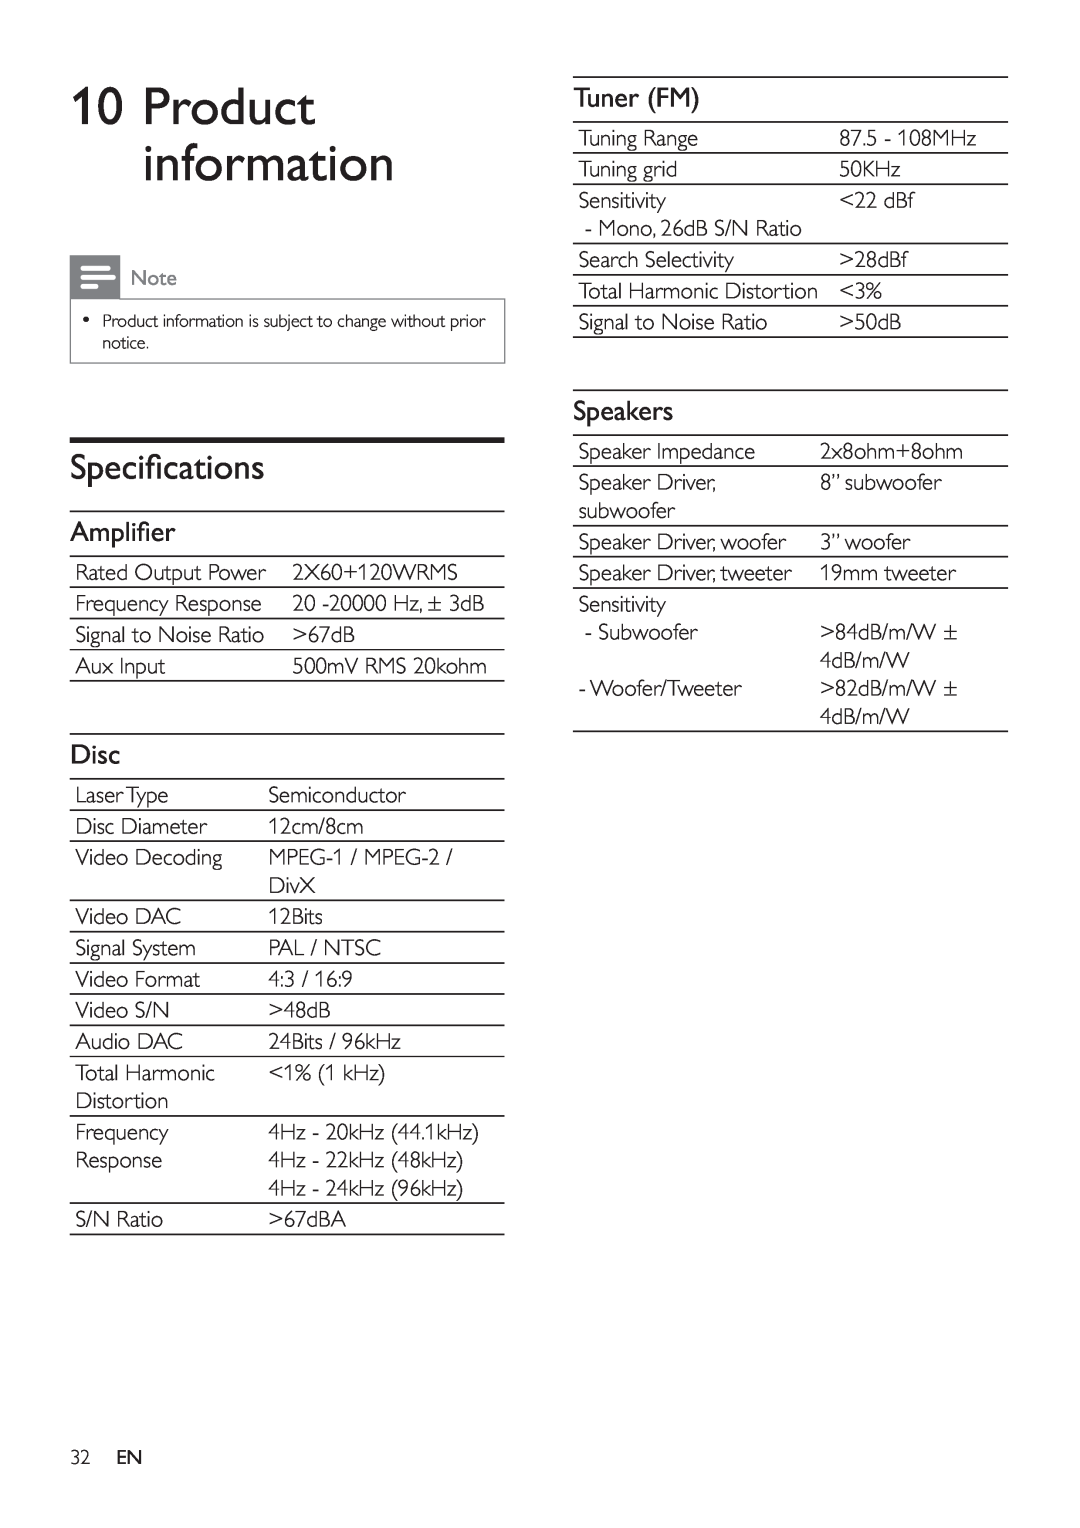 Philips HSB4383/12 user manual 10Product information, Speciﬁ cations, Ampliﬁ er, Disc, Tuner FM, Speakers 